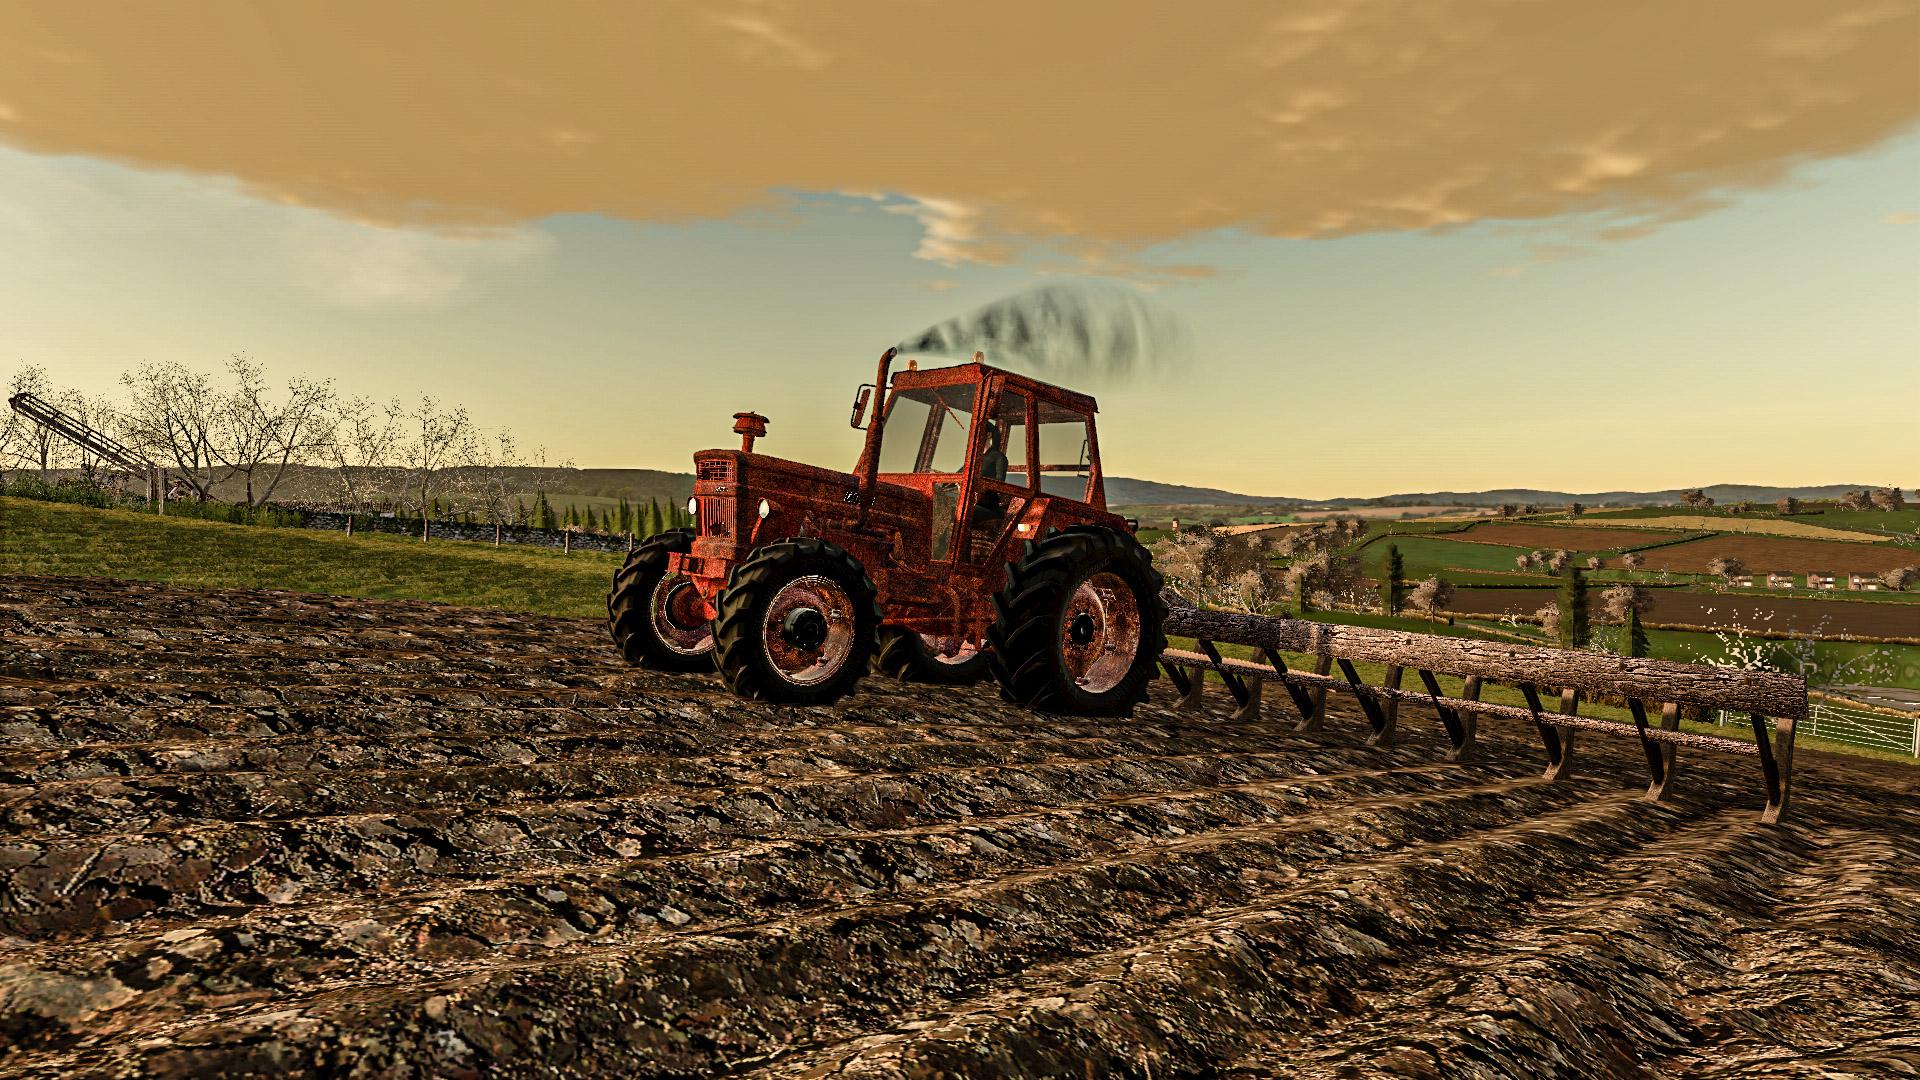 big bud tractor farming simulator 19